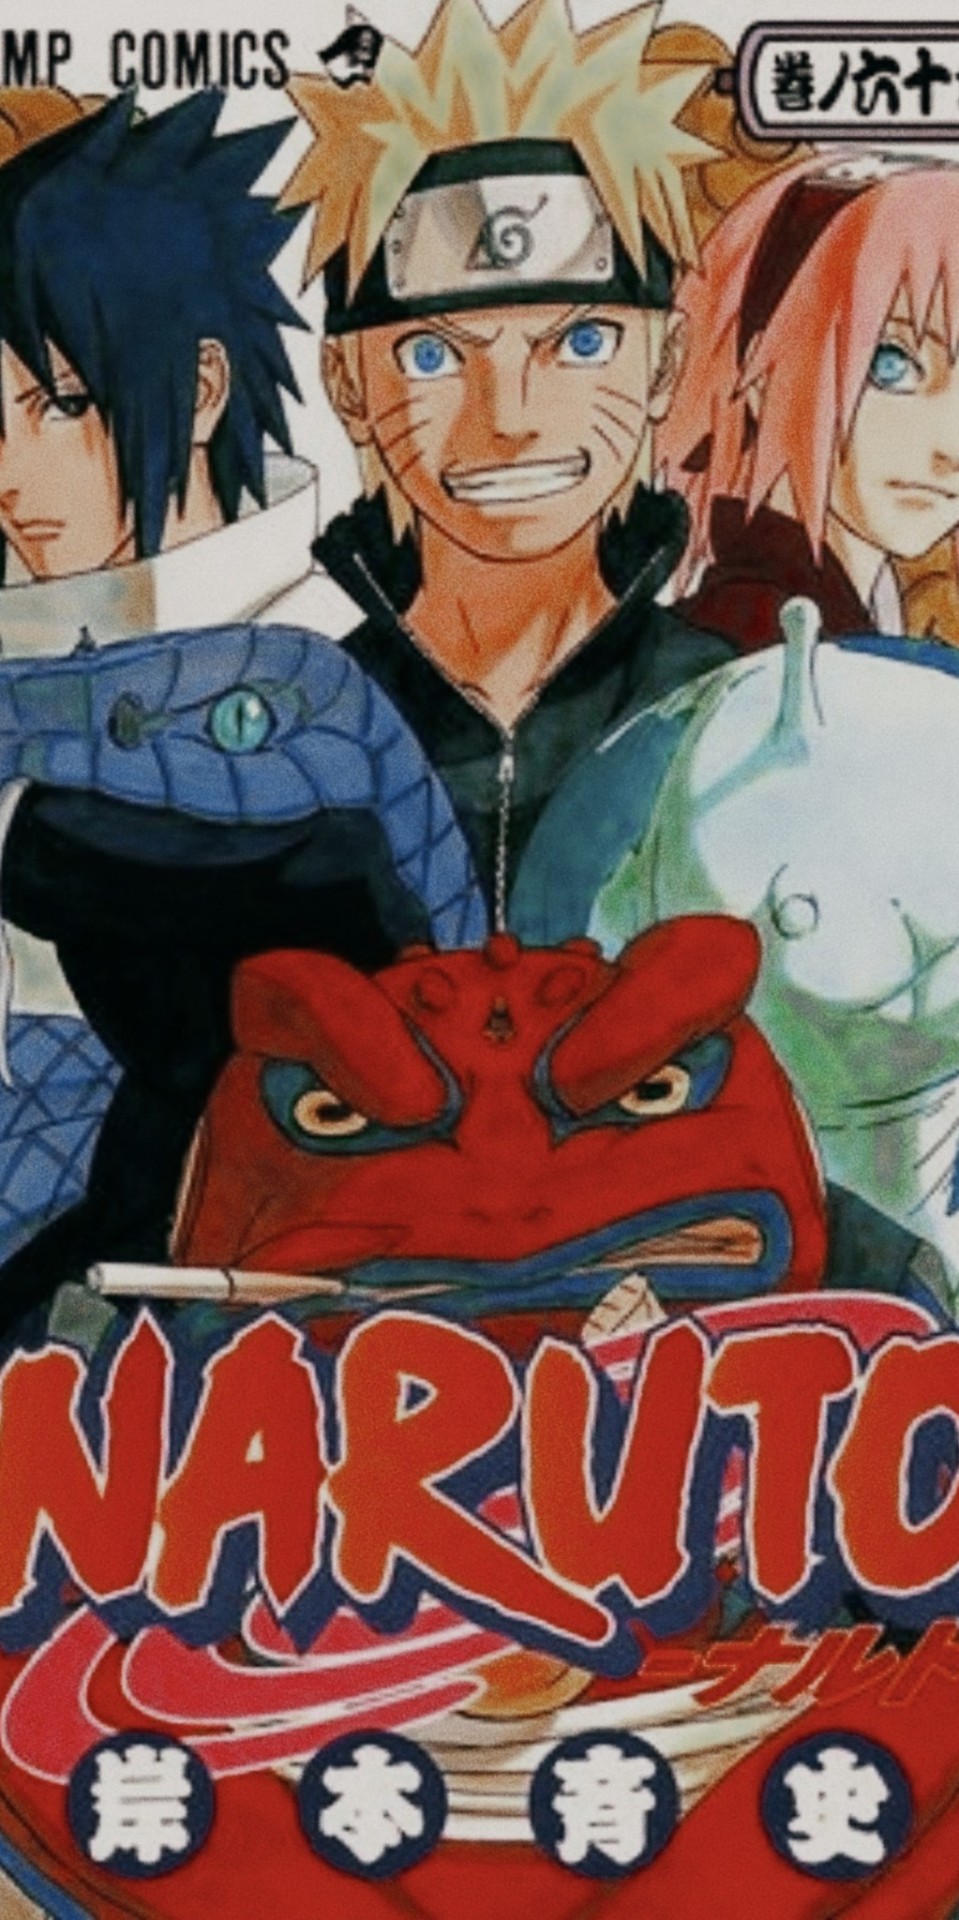 Naruto manga wallpaper